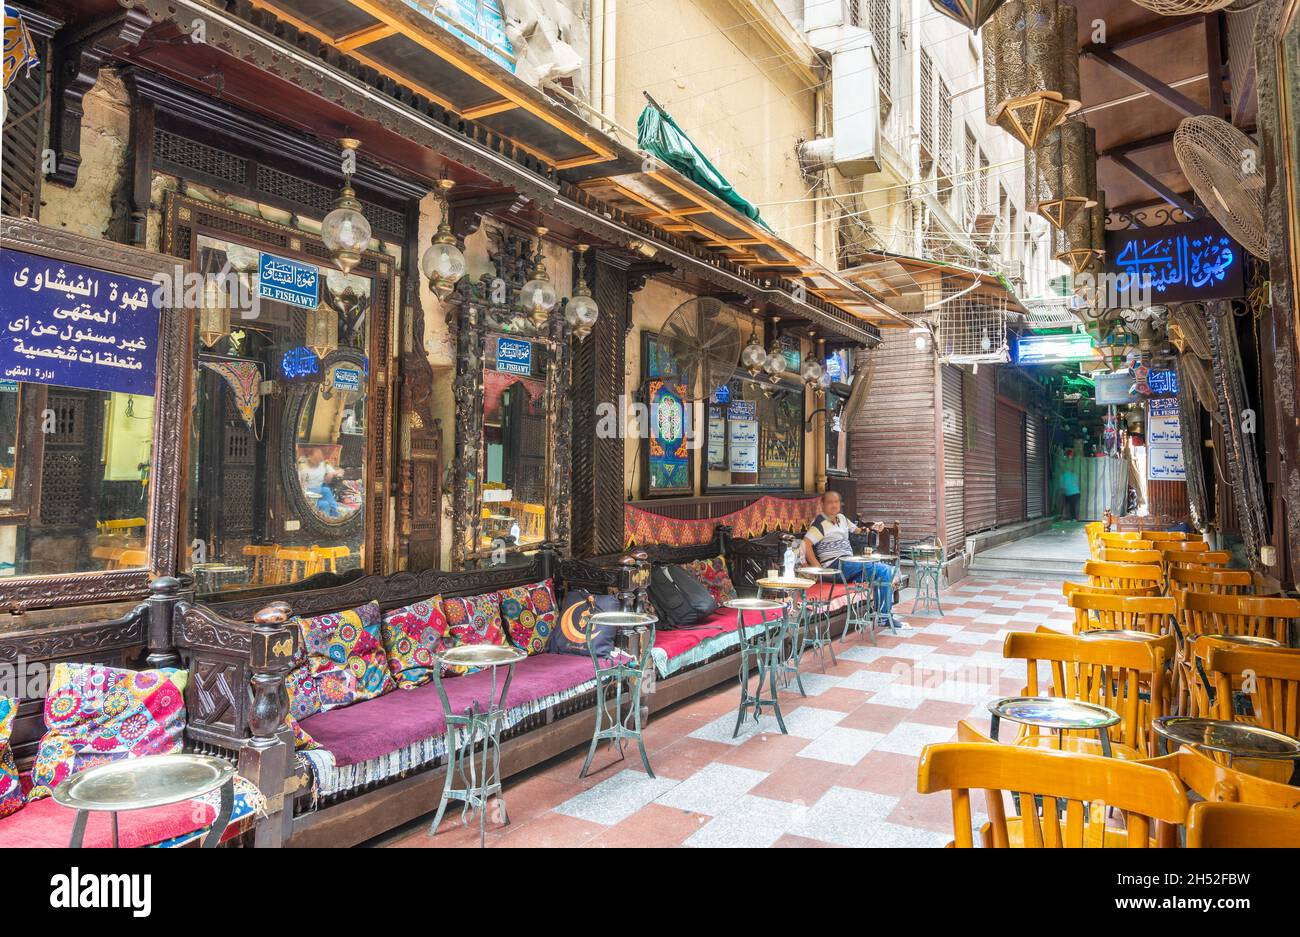 El Cairo, Egipto - 25 2021 de septiembre: Antiguo famoso café, El Fishawi, situado en la histórica era de Mamluk Khan al-Khalili famoso bazar y souq Foto de stock